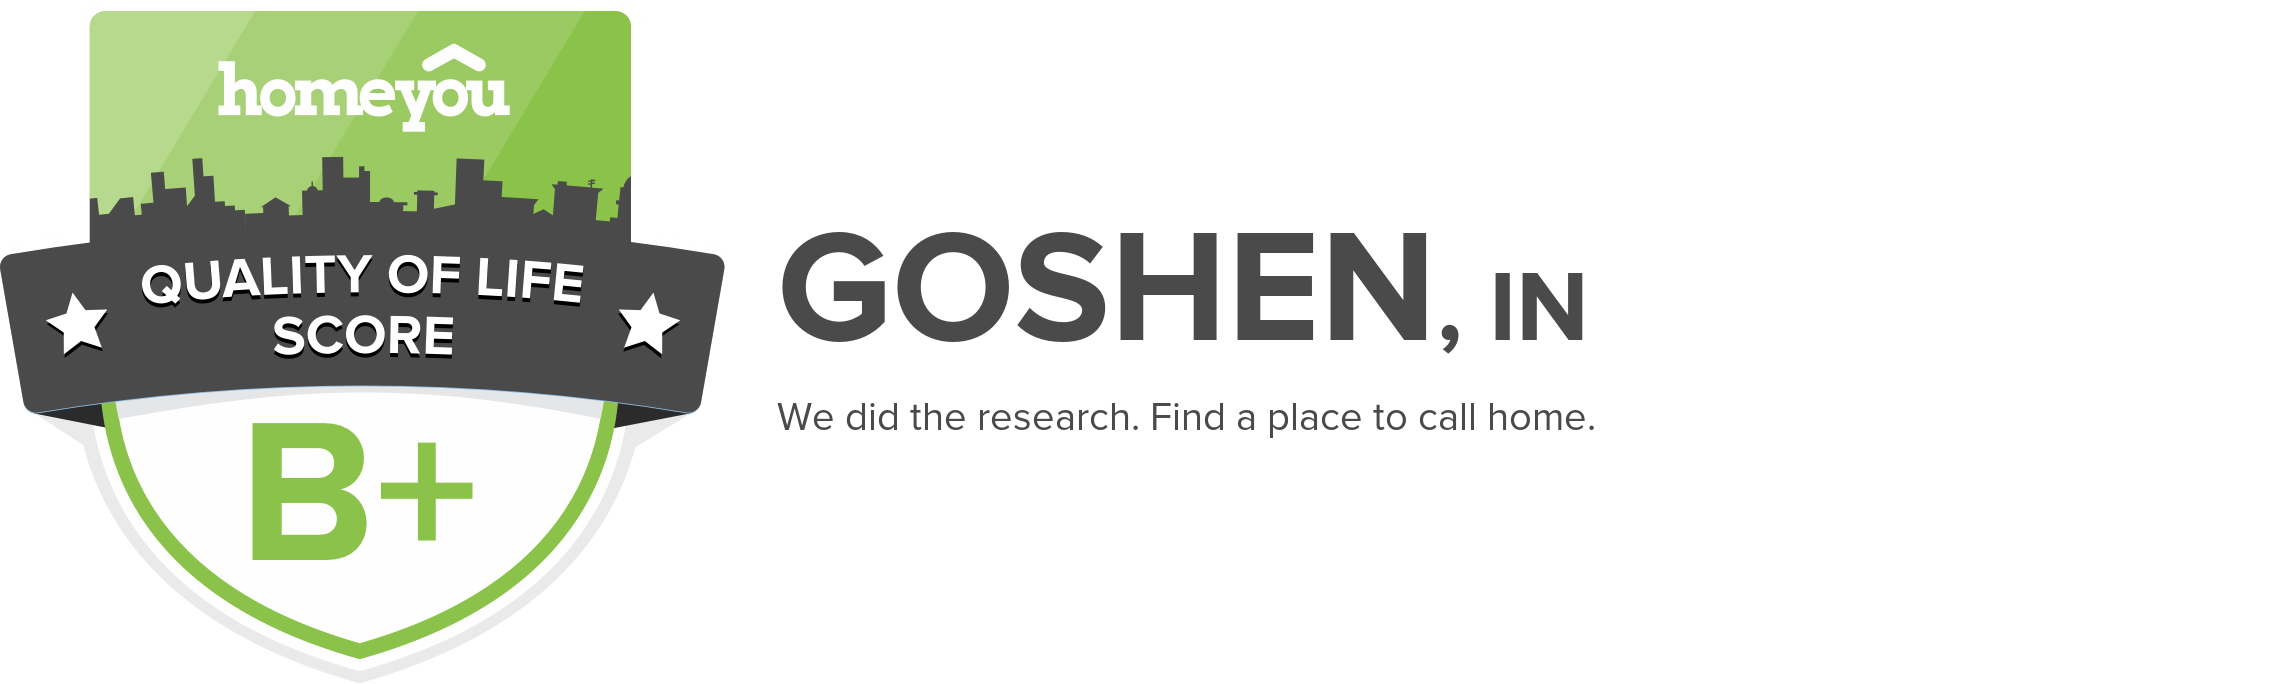 Goshen, IN